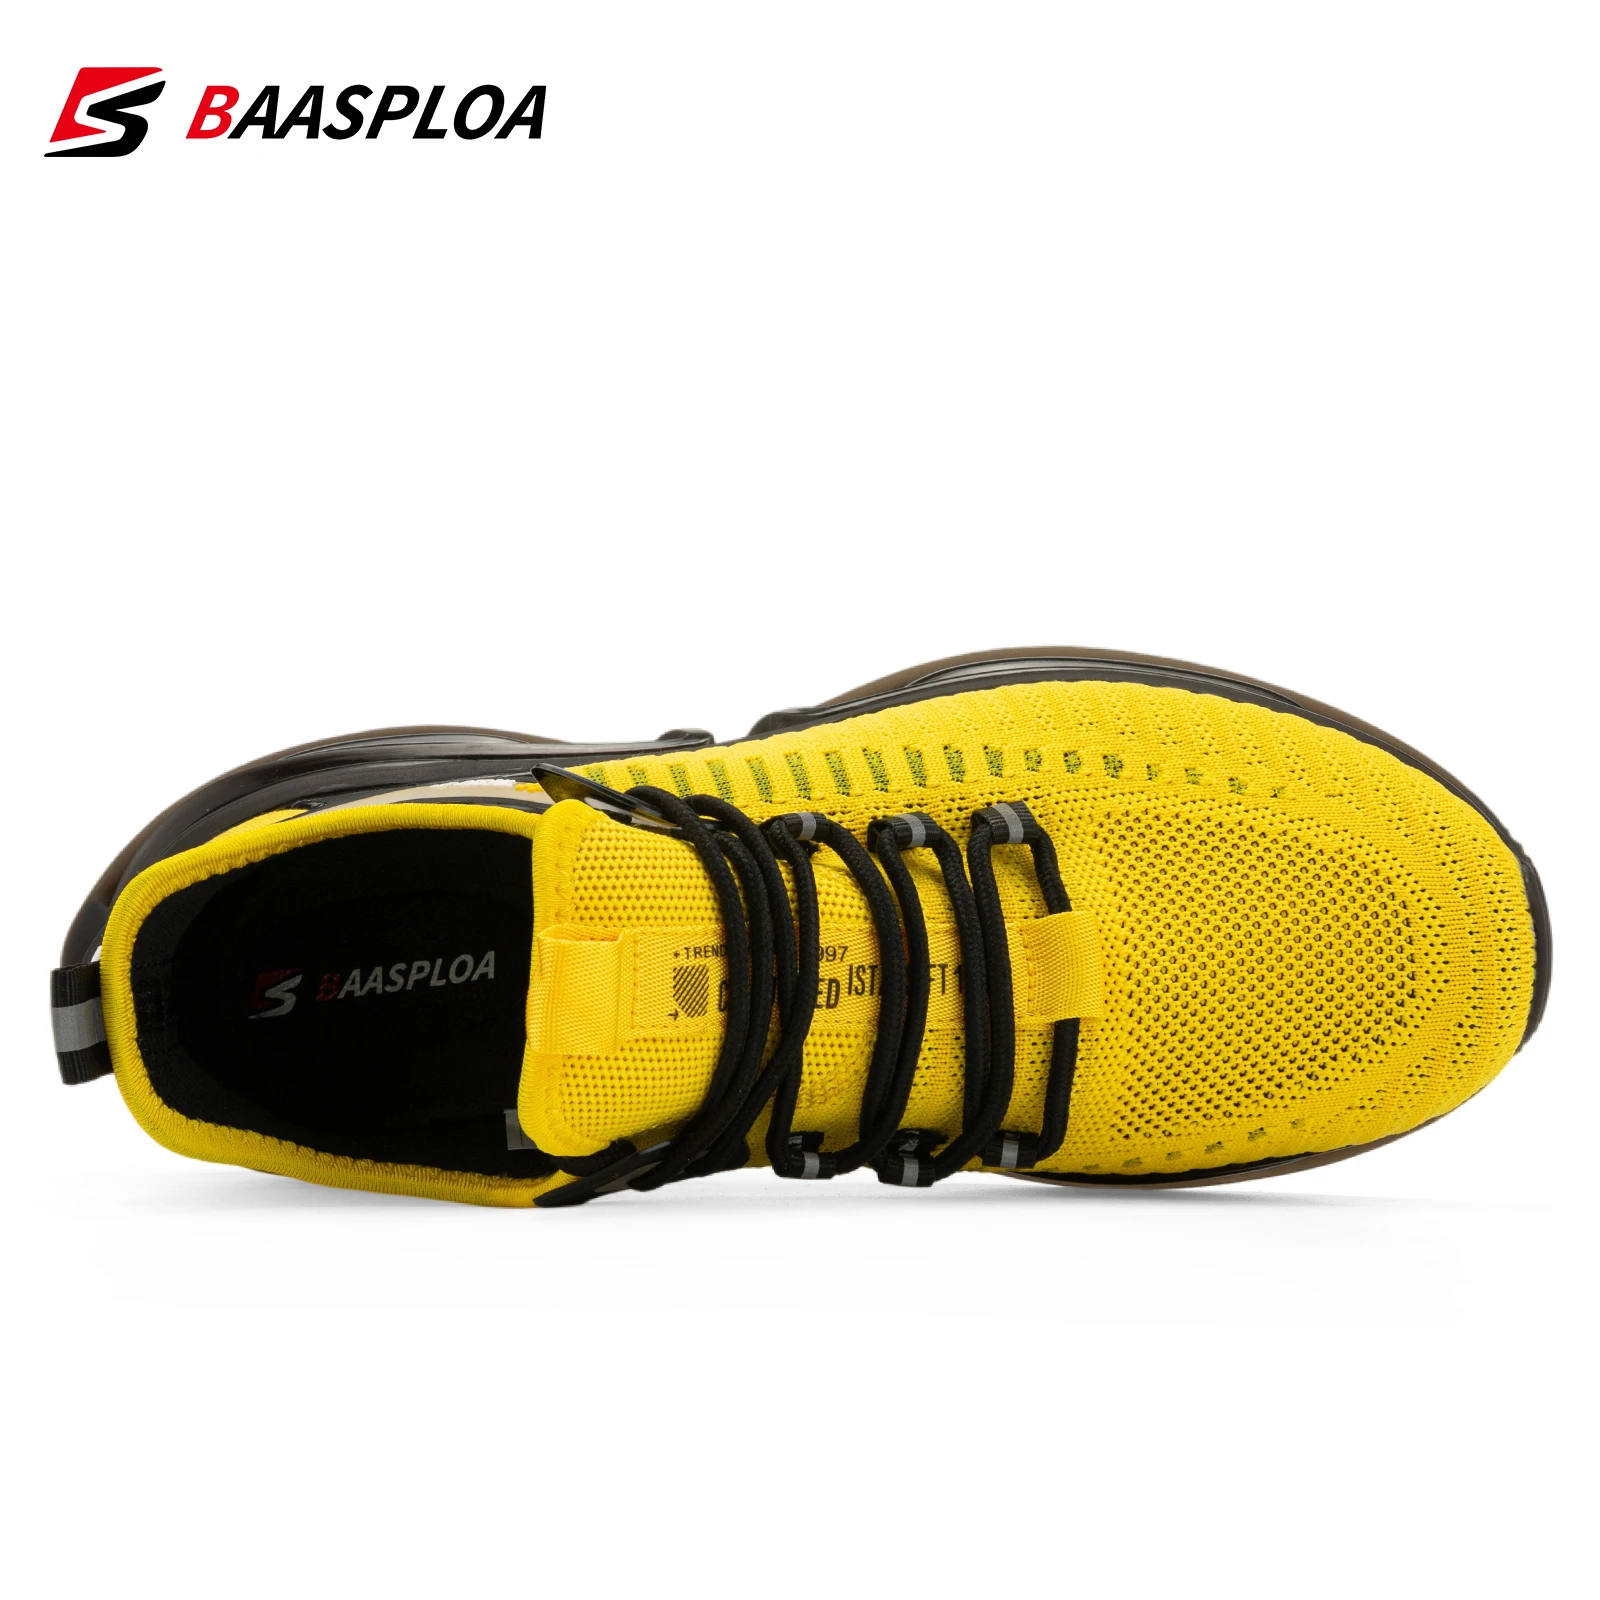 Baasploa New Men Keep-warm High Top Waterproof Sneakers Casual Outdoor Running Shoes Tenis Luxury Shoes Winter Male Plush Shoes 3